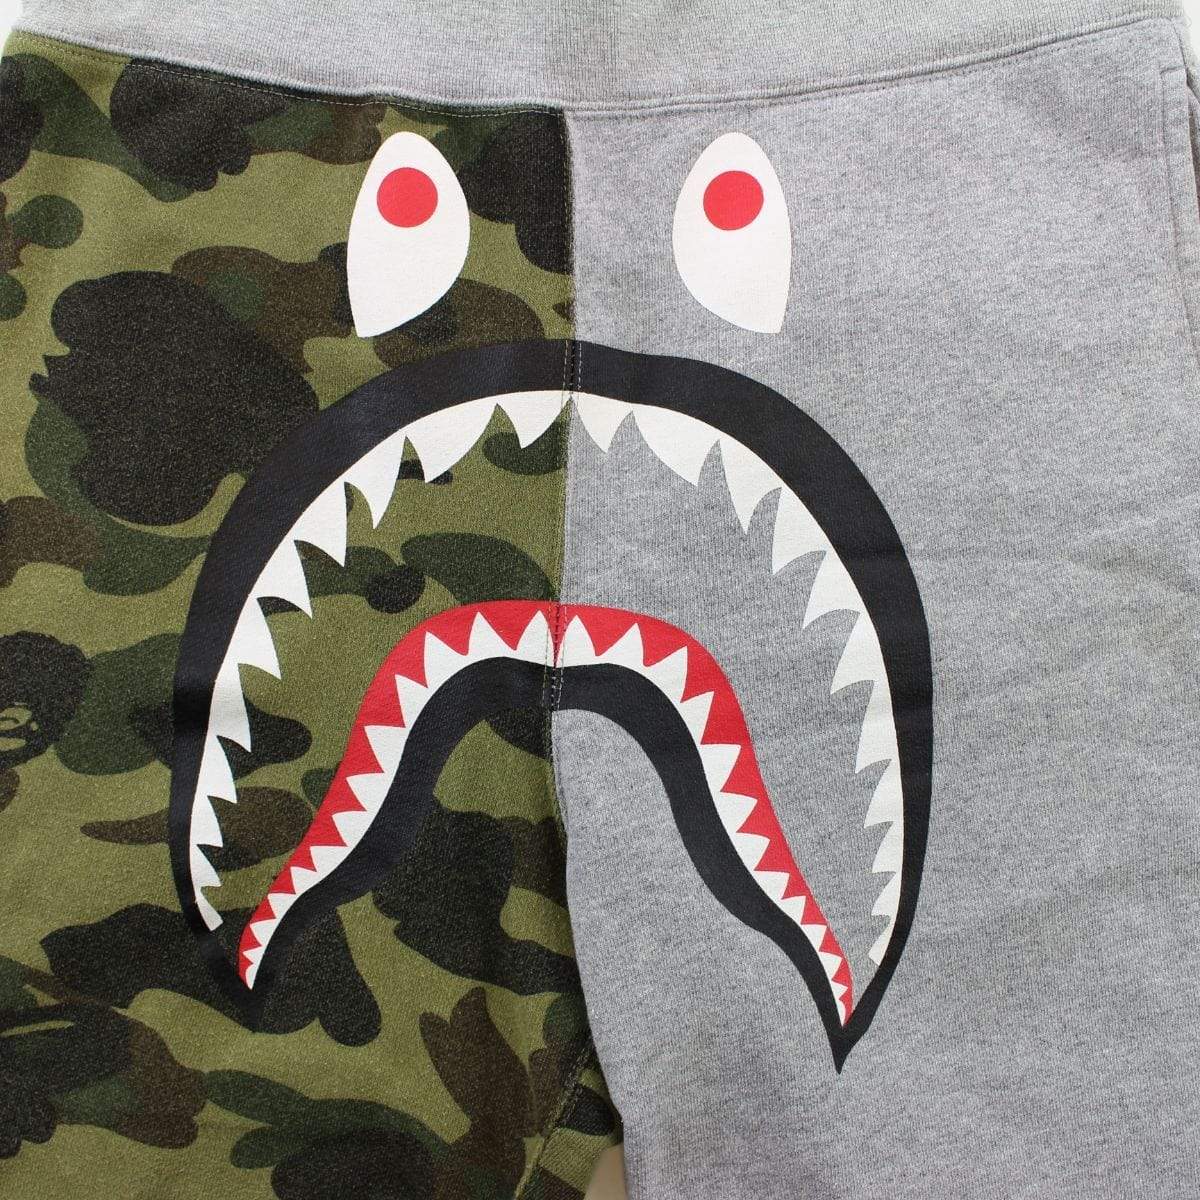 Bape 1st Green Camo Half Grey Shark Face Shorts - SaruGeneral